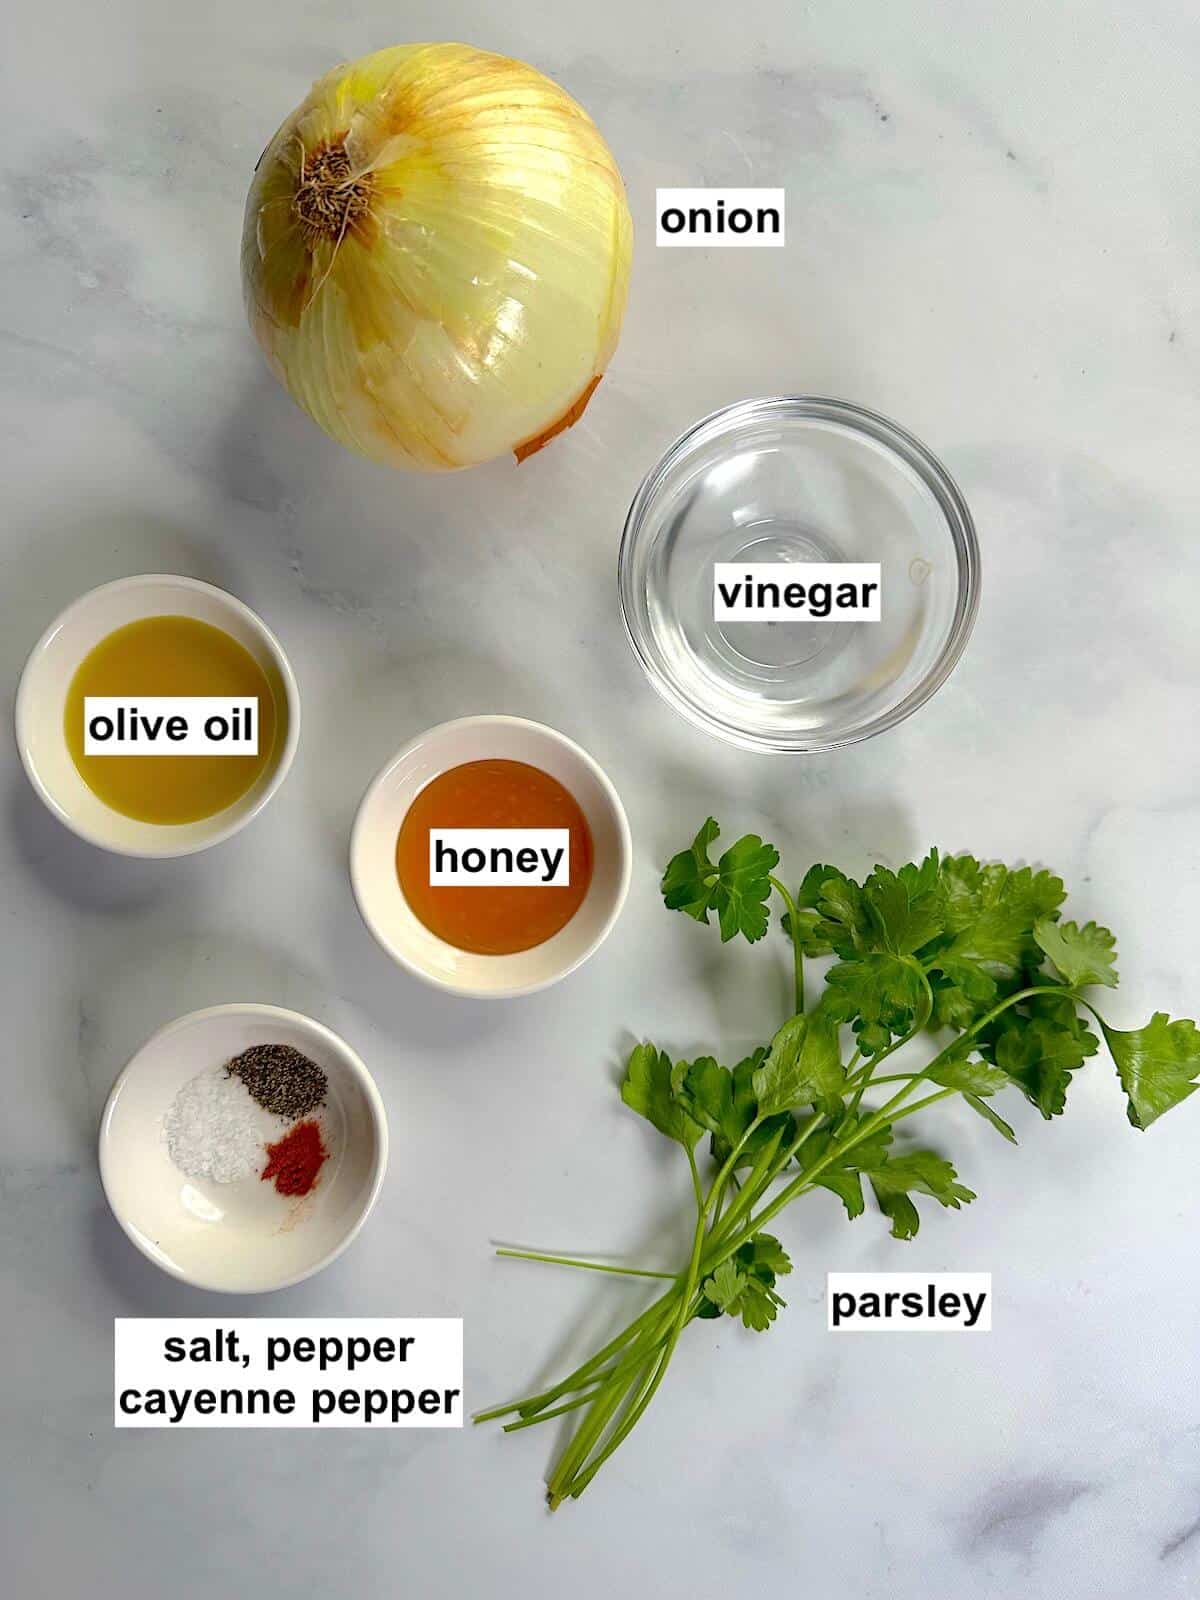 Ingredients needed for the vinegar based option.